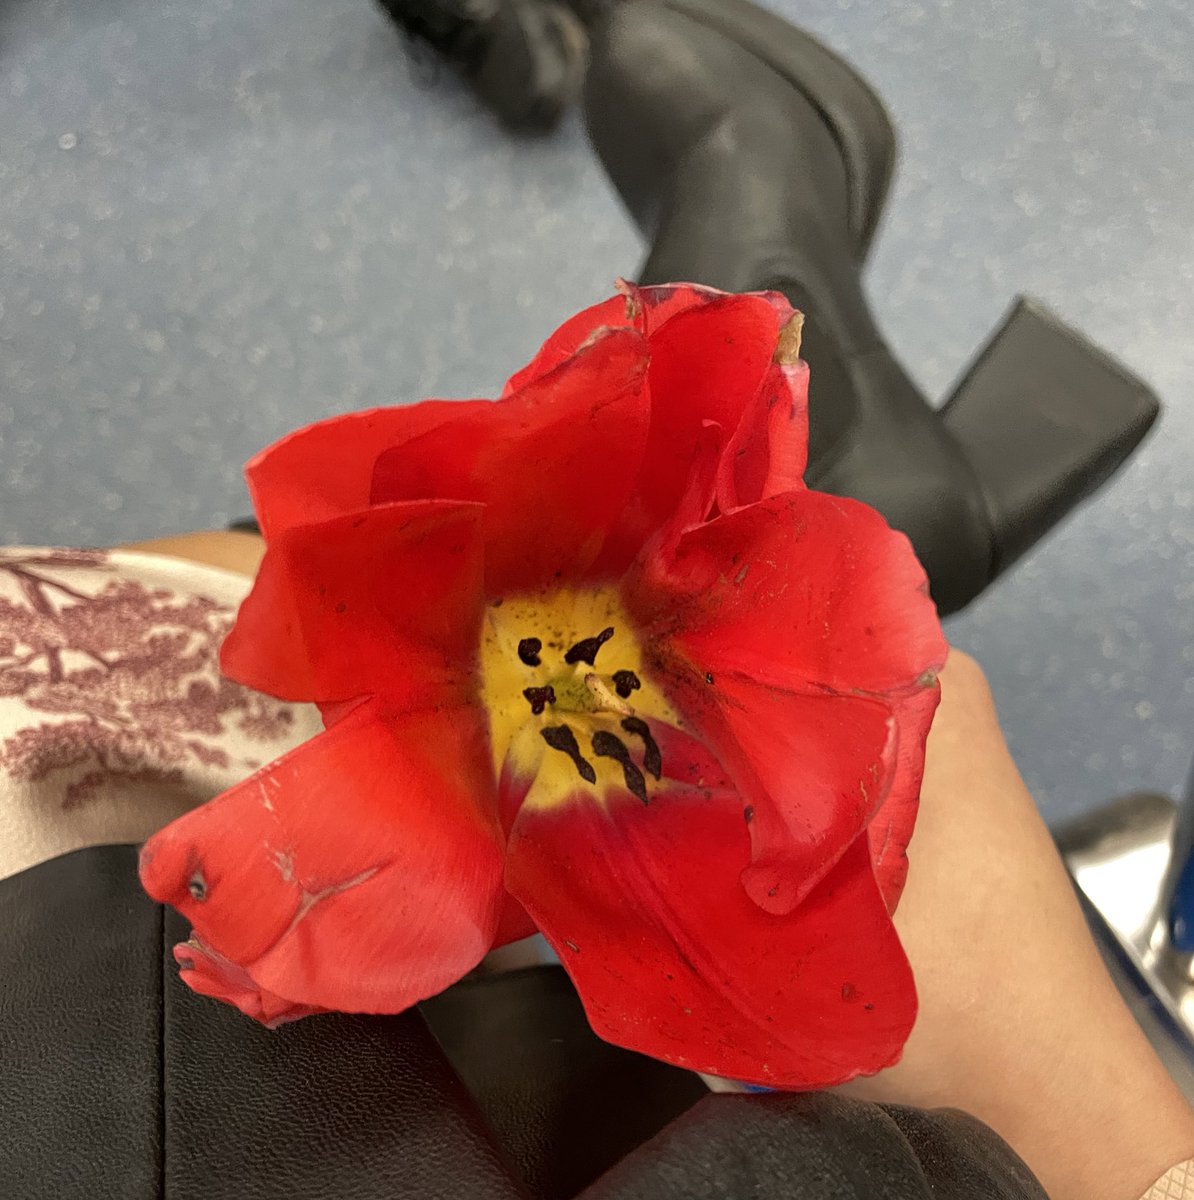 the cutest little girl just randomly gave me a flower on the train??😭